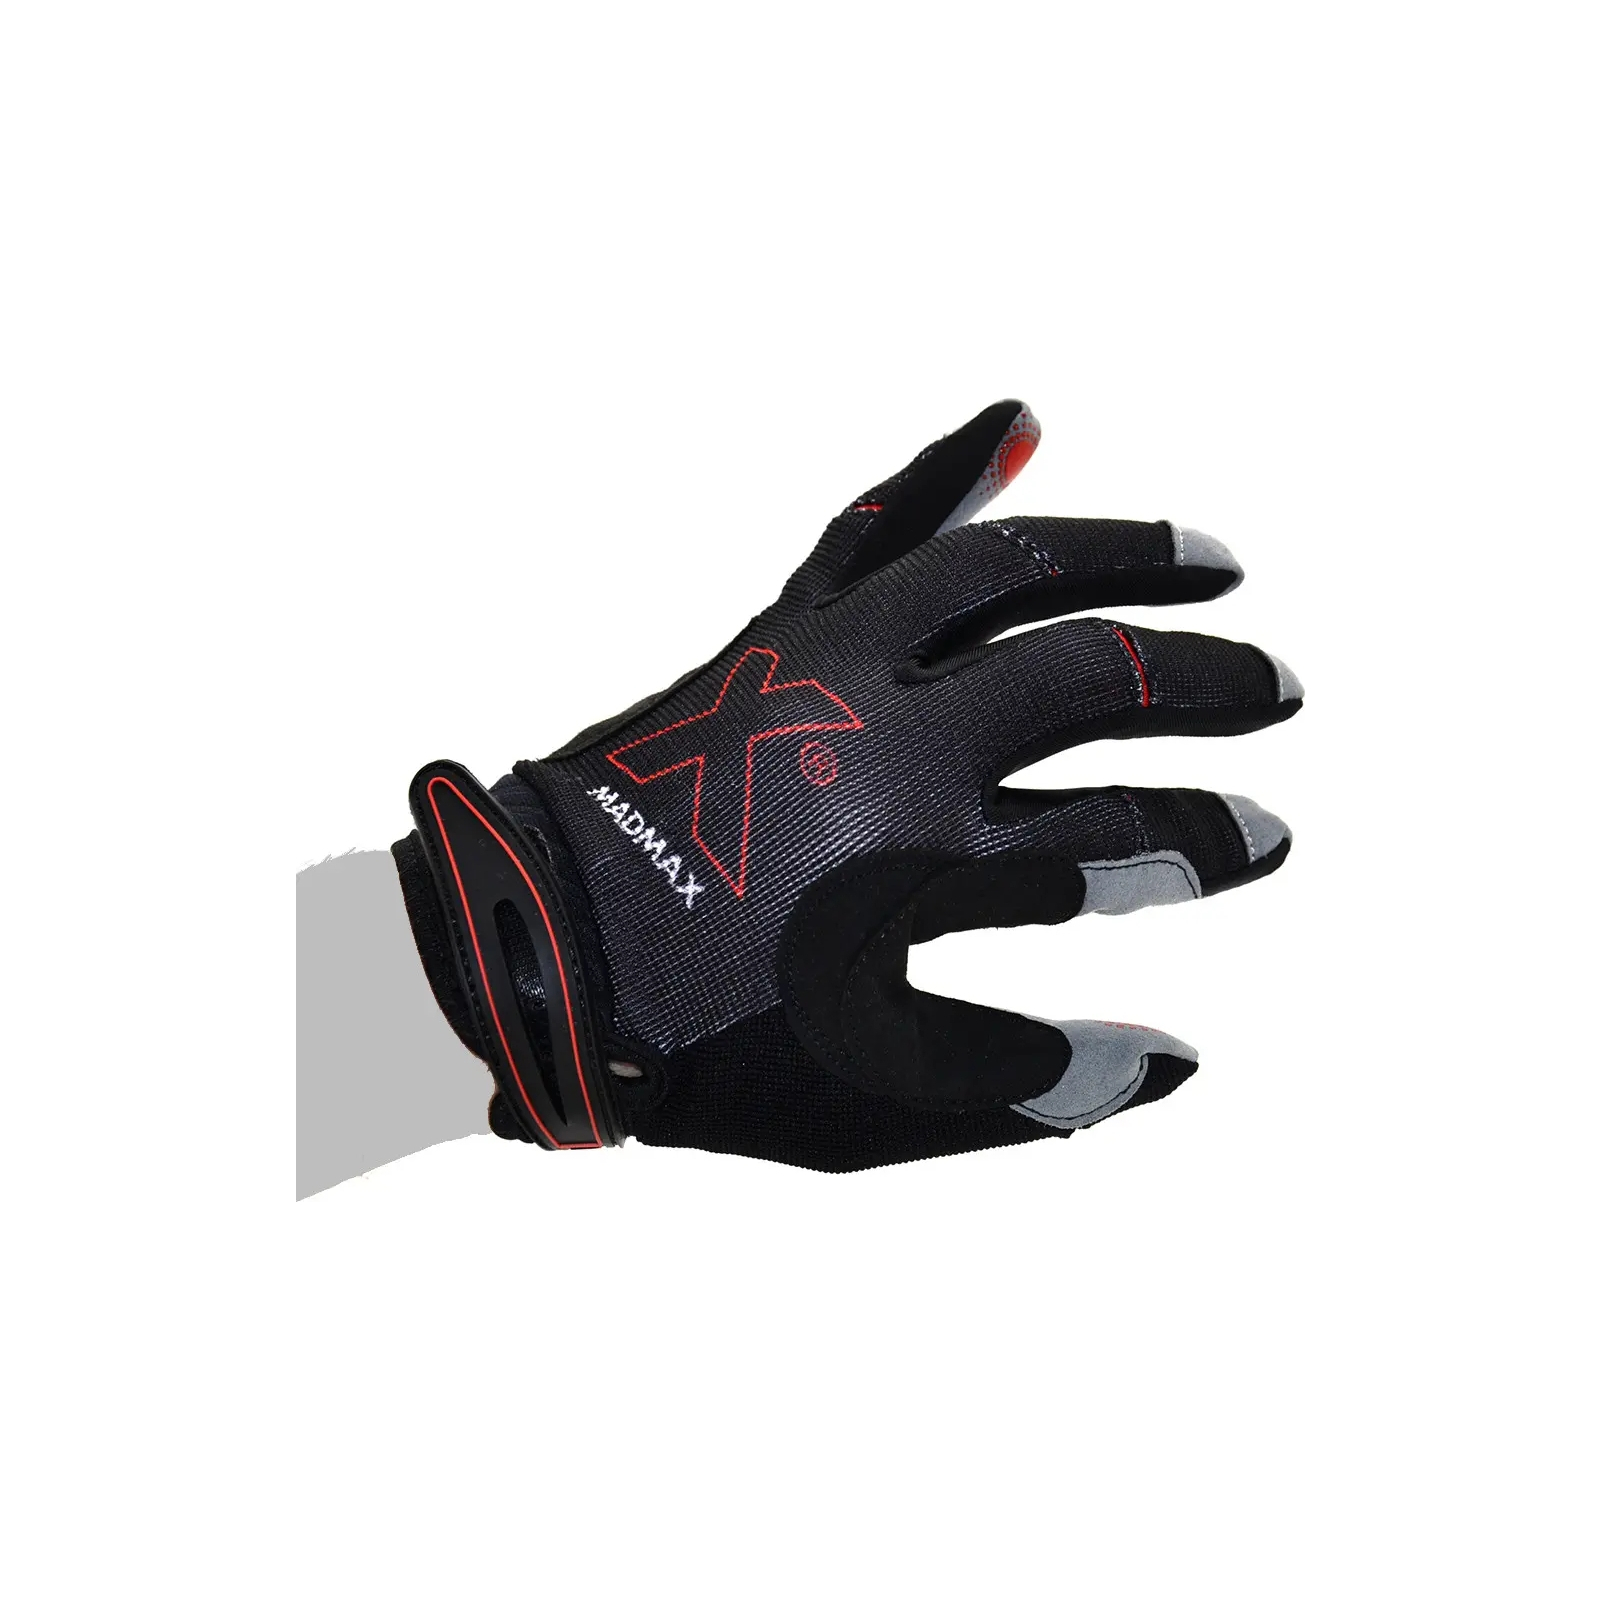 Перчатки для фитнеса MadMax MXG-103 X Gloves Black/Grey XL (MXG-103-BLK_XL) изображение 7